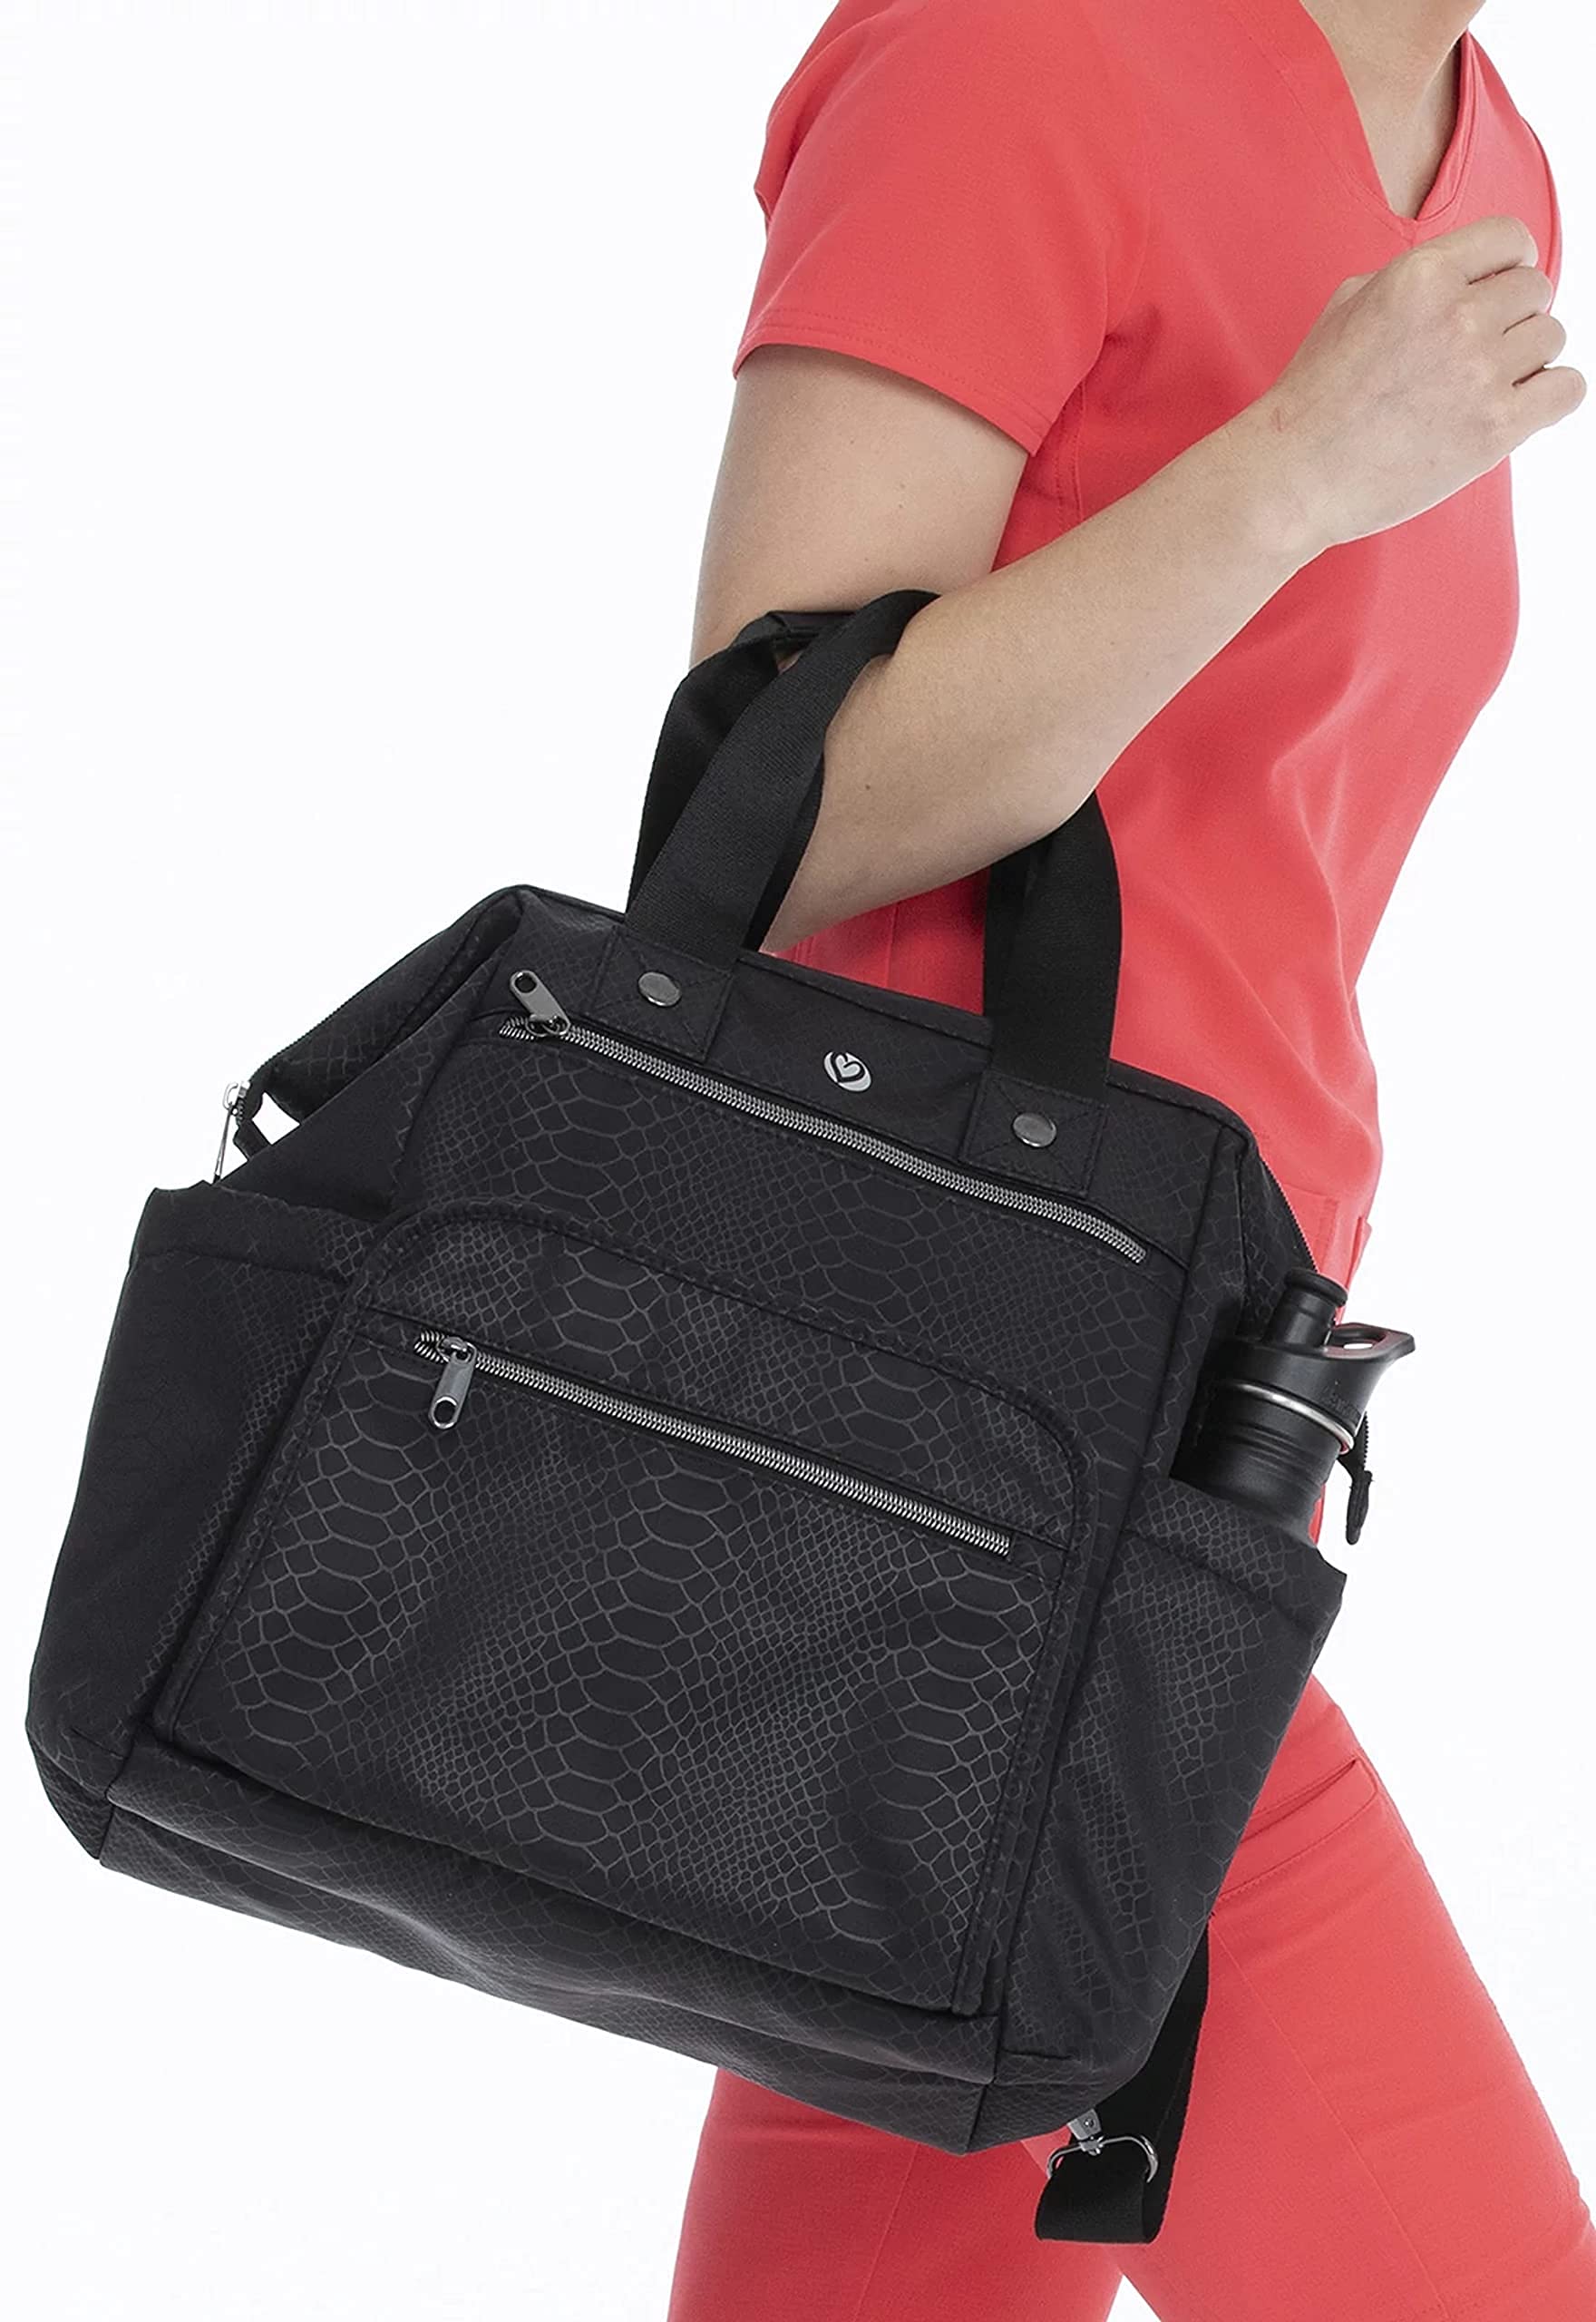 HeartSoul Women's Convertible Bella Backpack, Nurse Backpack for Work, One size, Black Pebble w/Black Straps